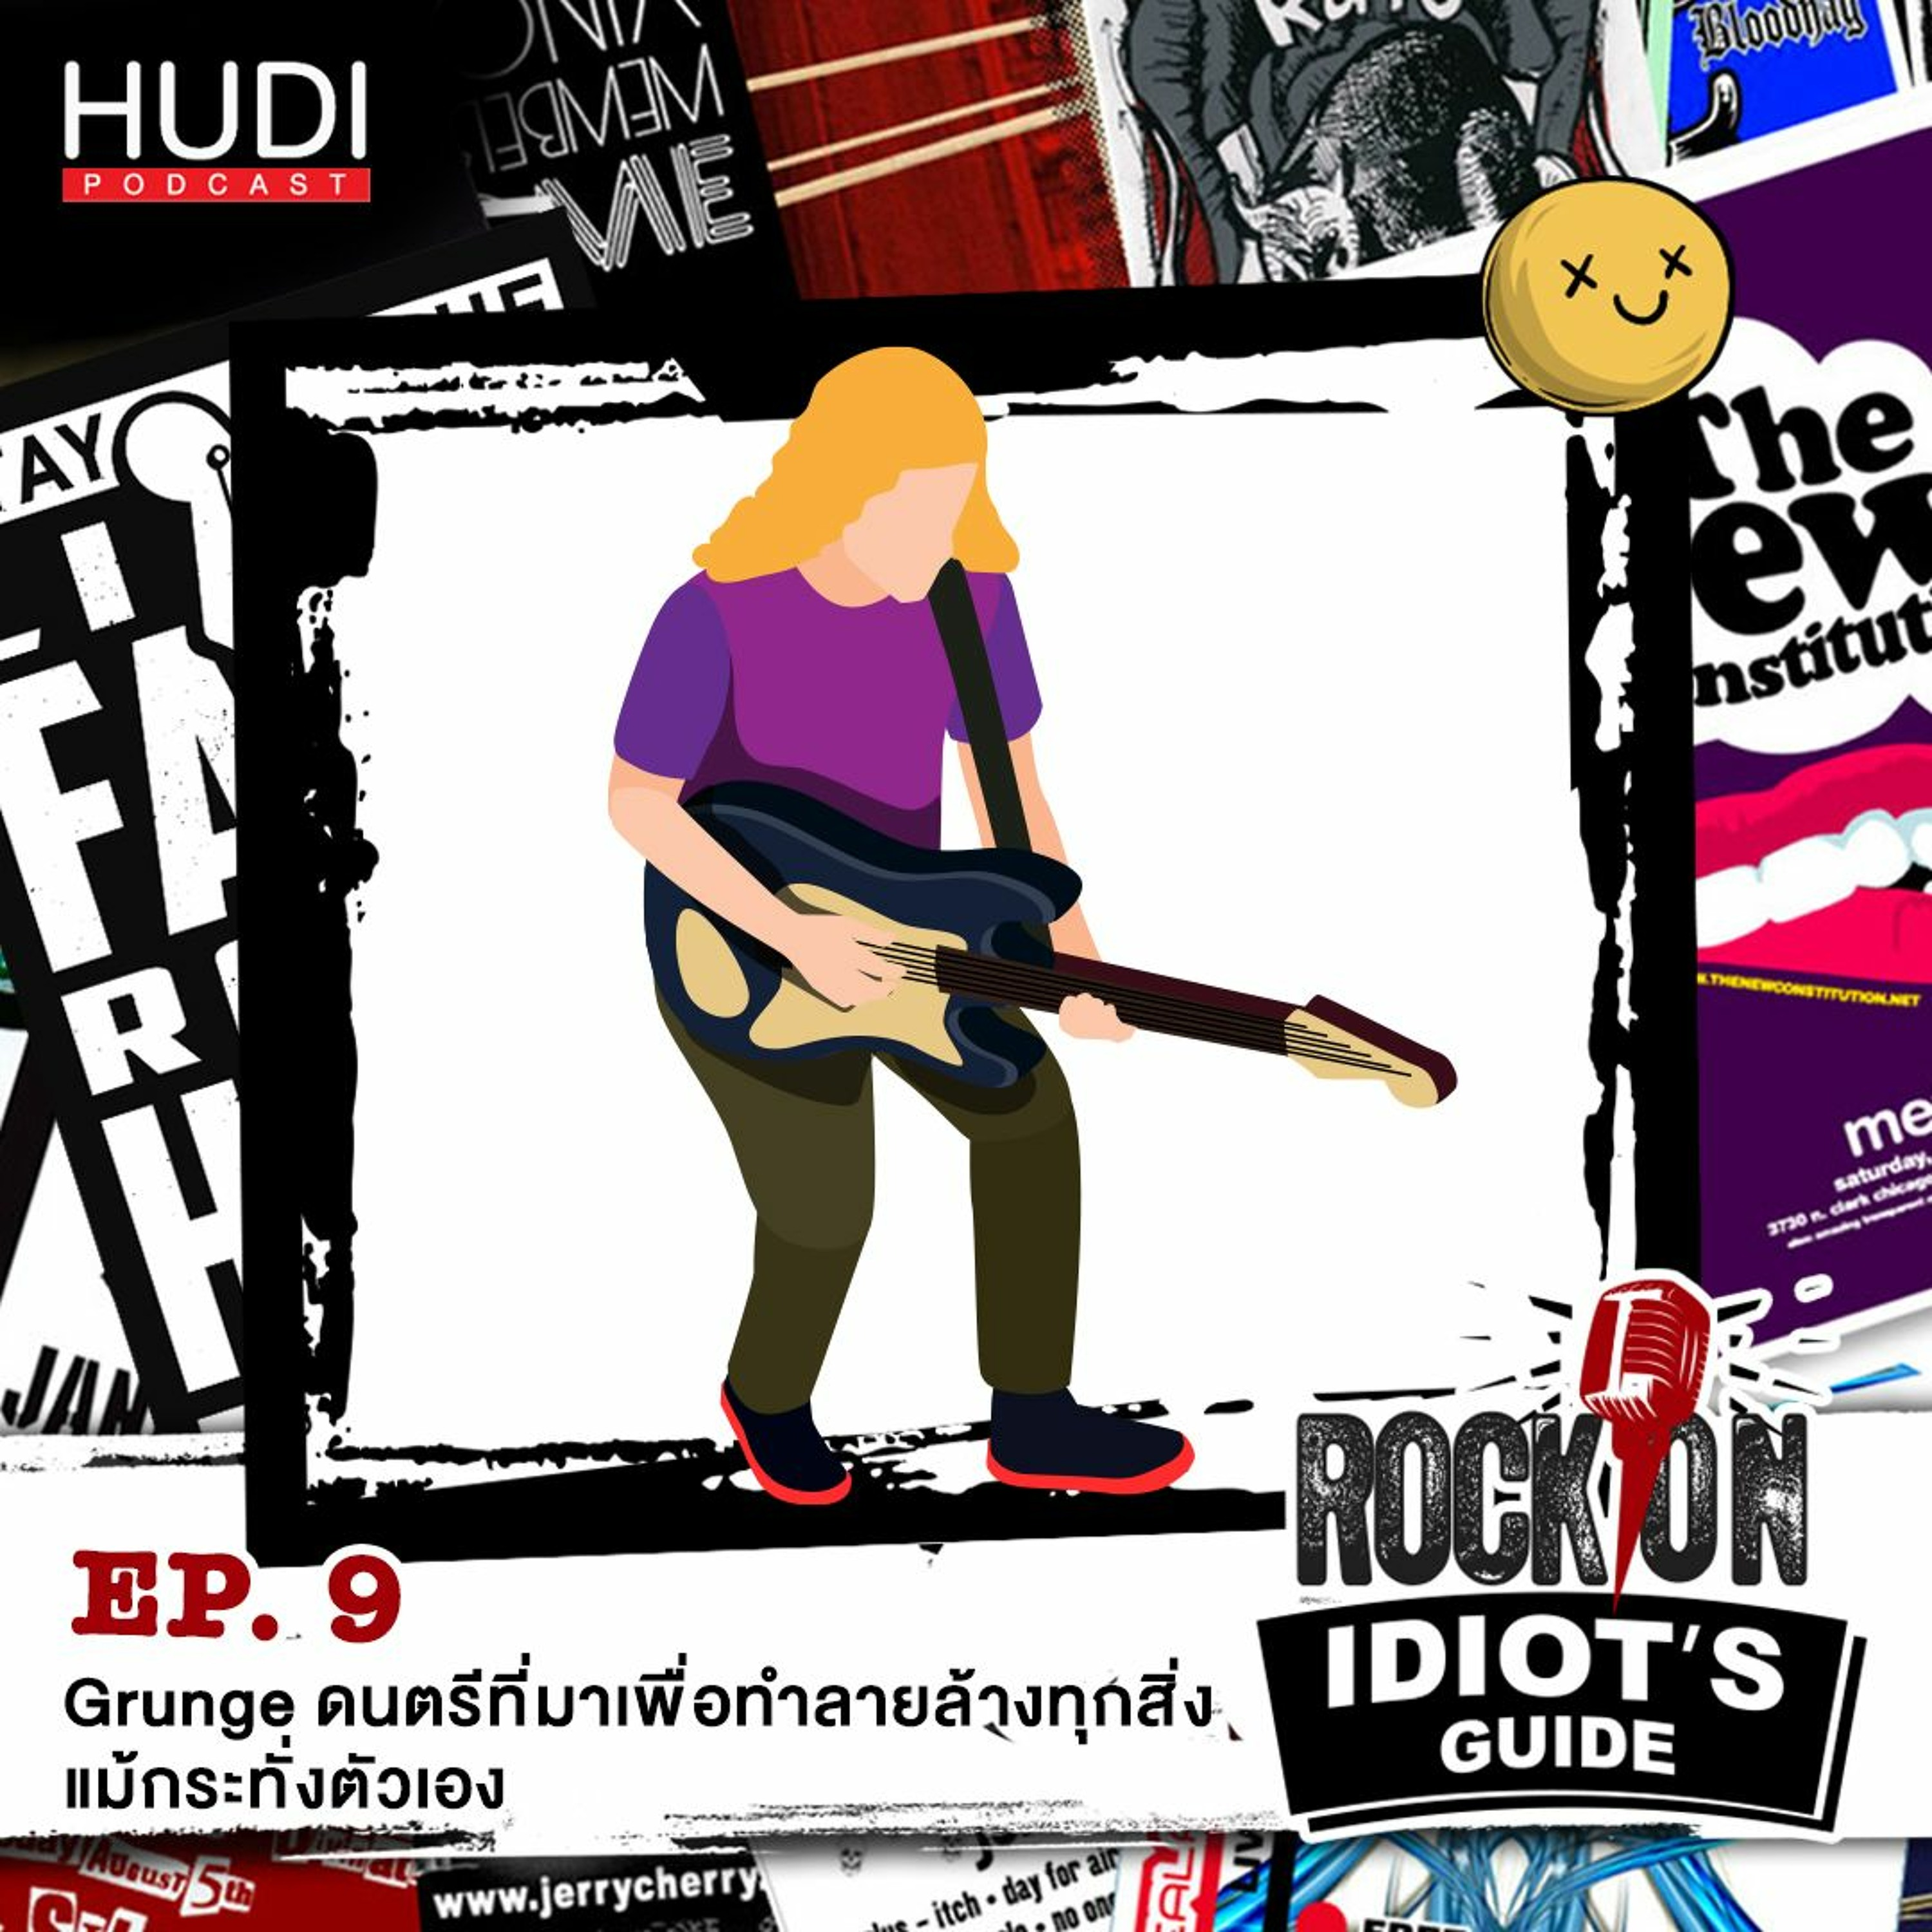 Rock On Idiot's Guide Ep.09 - Grunge ดนตรีที่มาเพื่อทำลายล้างทุกสิ่งแม้กระทั่งตัวเอง